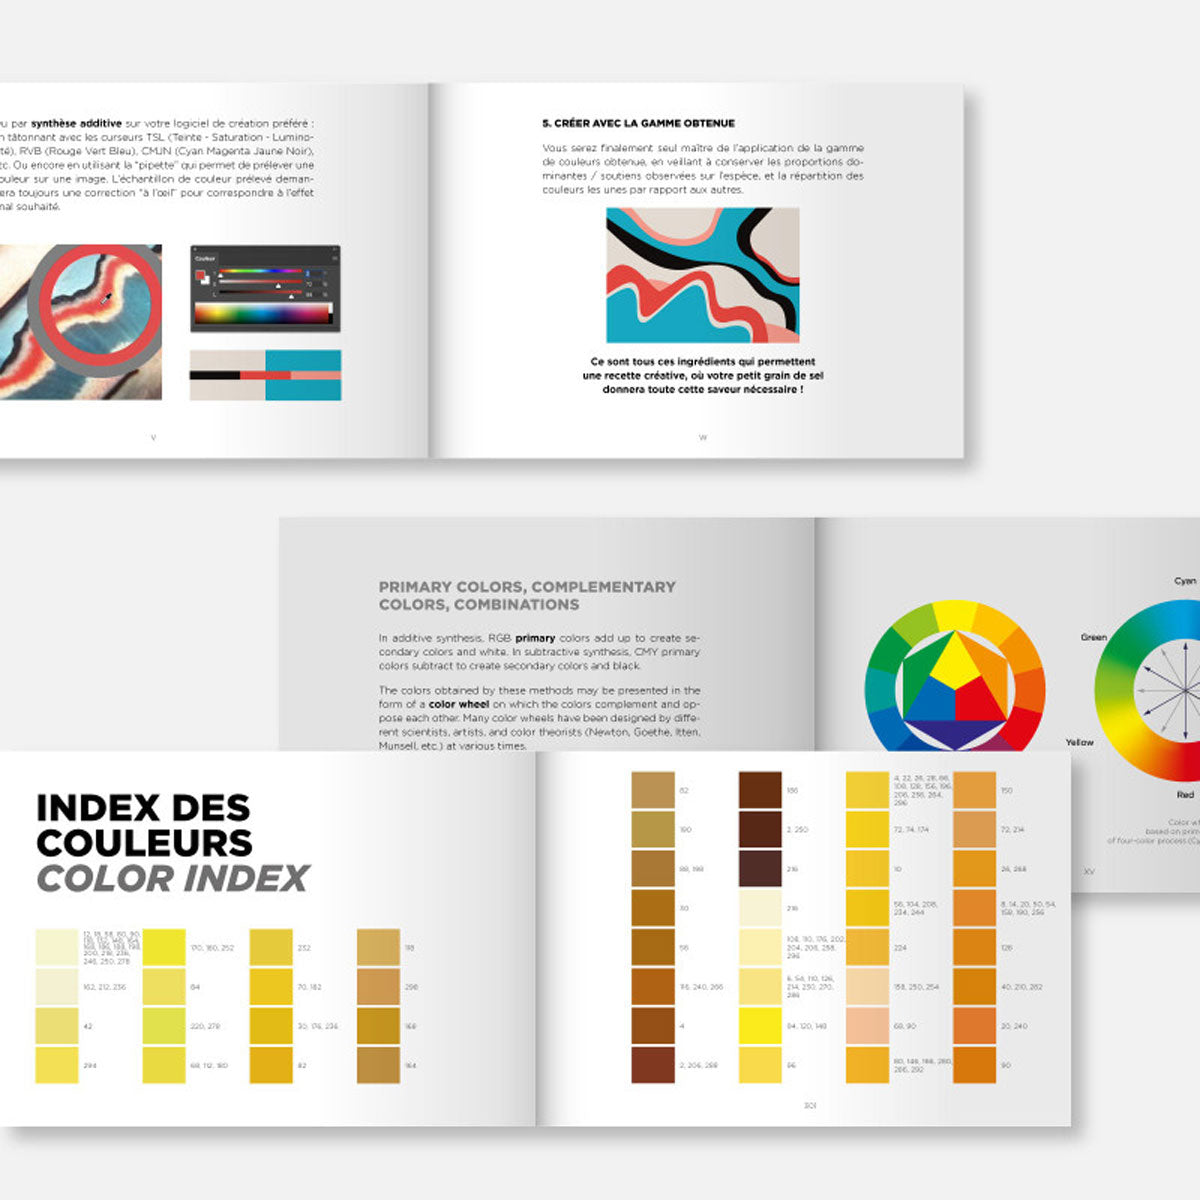 COLOR INSPIRATION | VOLUME 2 | BOOK on color combinations | Papier Tigre